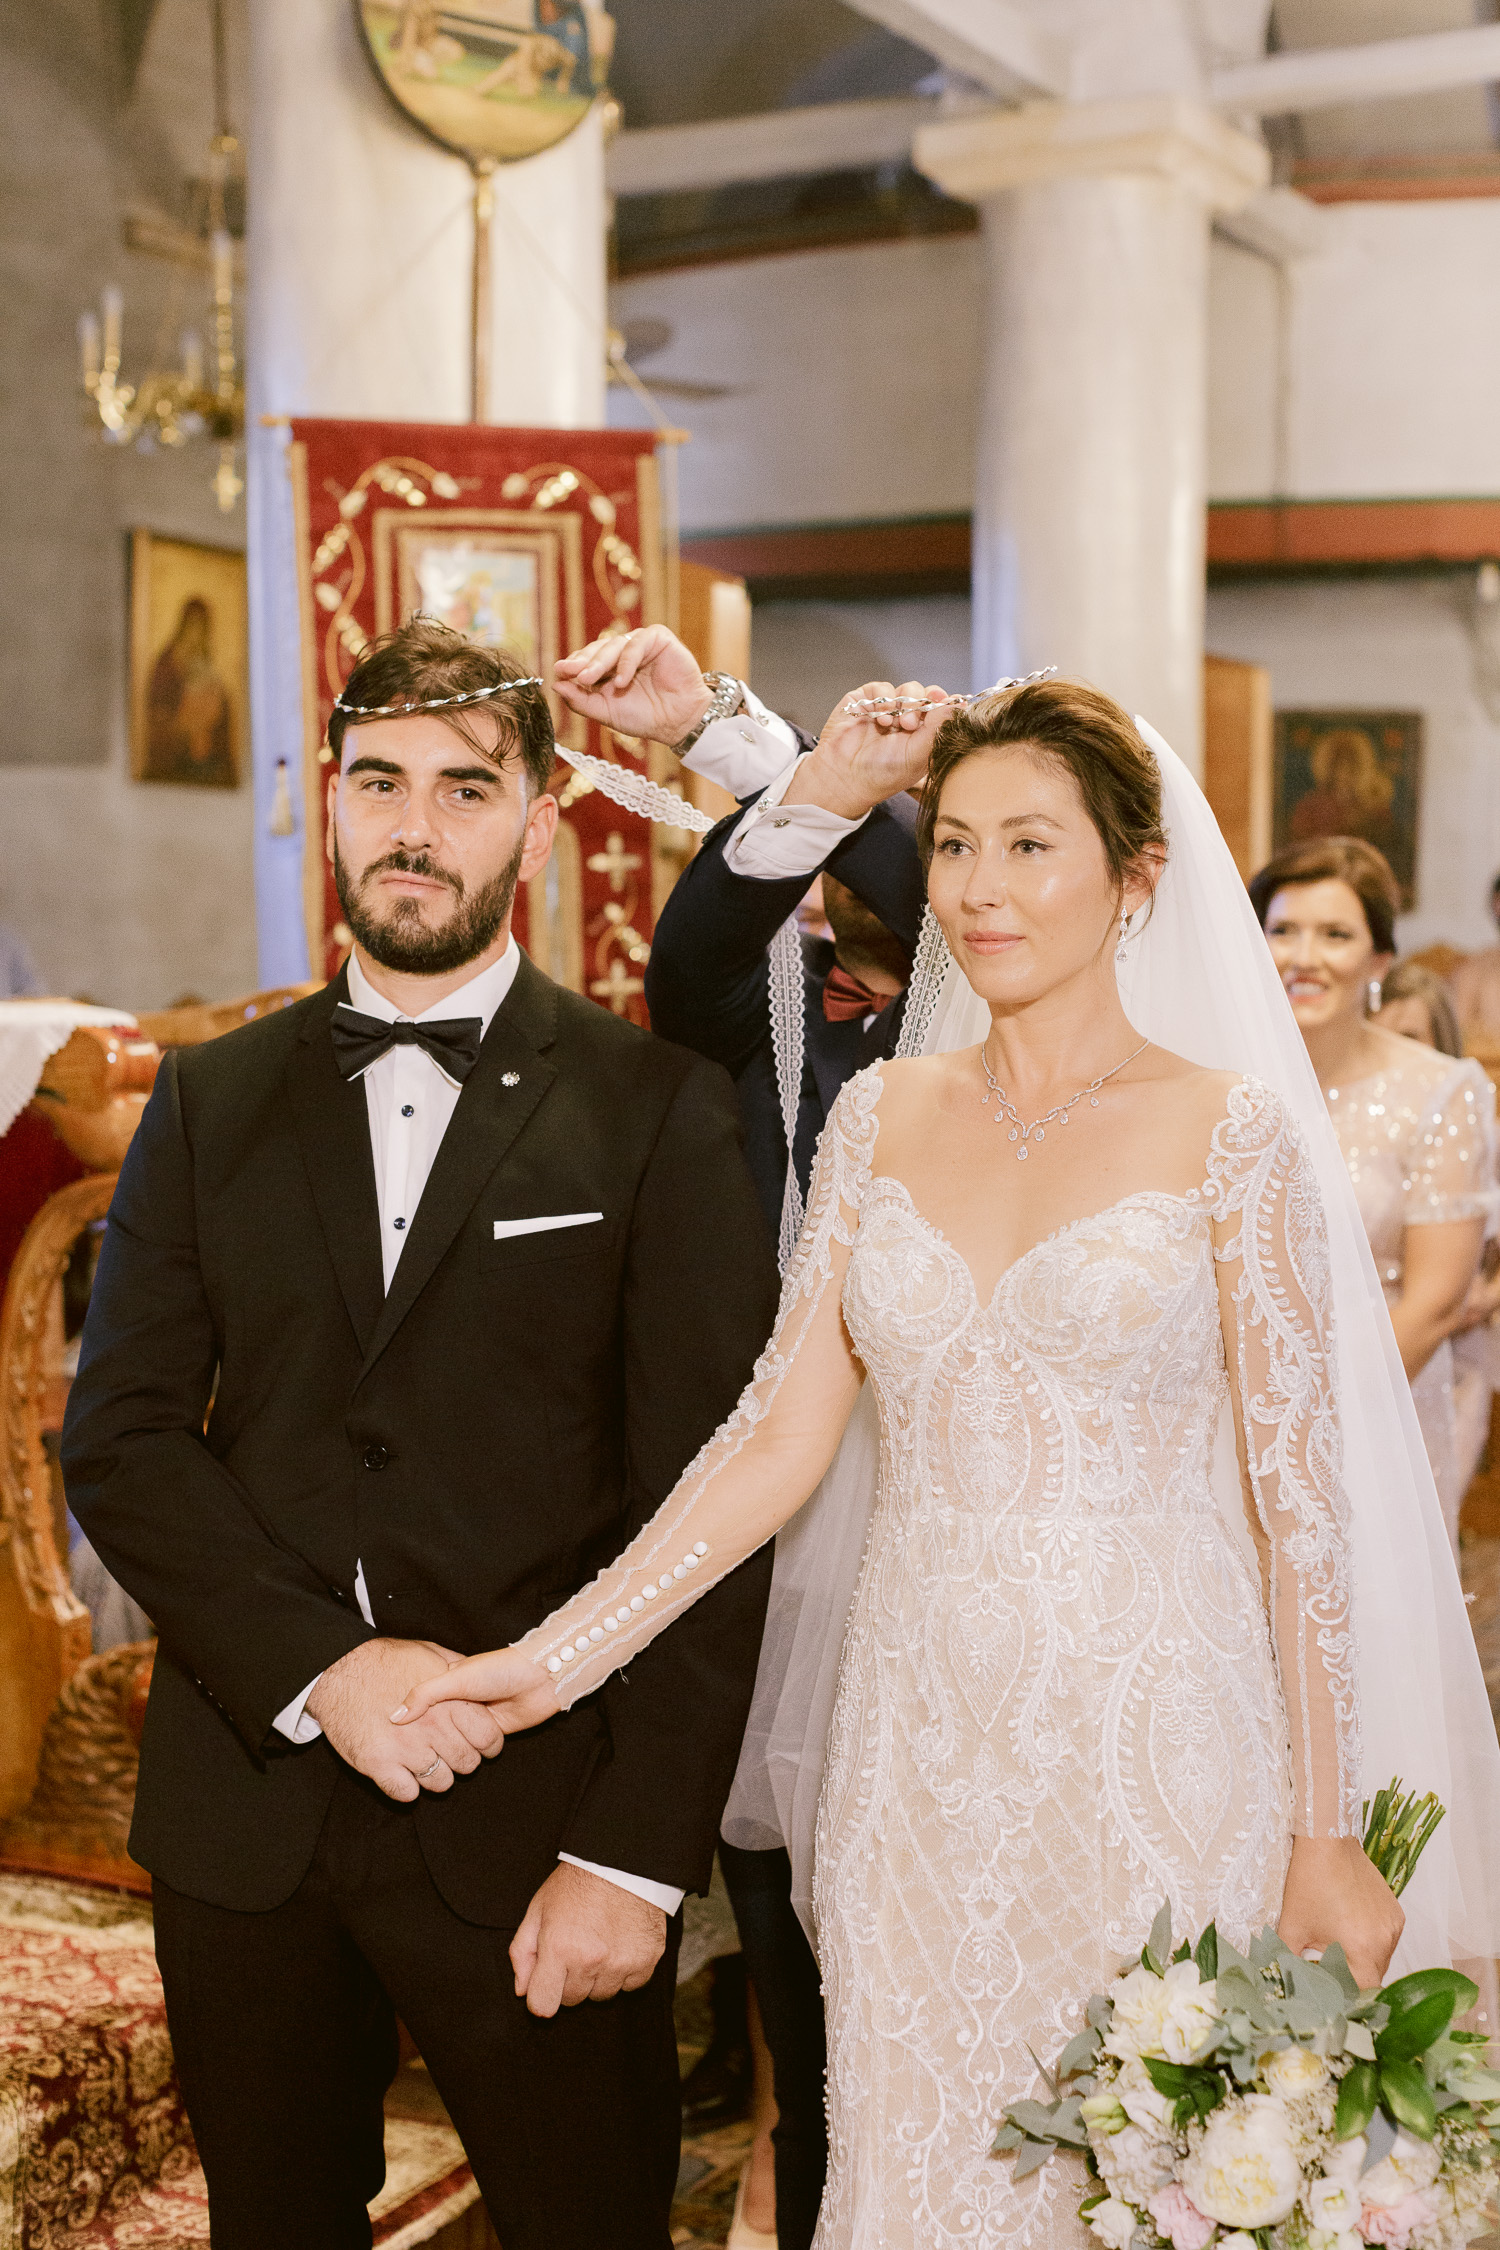 Orthodox wedding ceremony at a micro wedding in Halkidiki